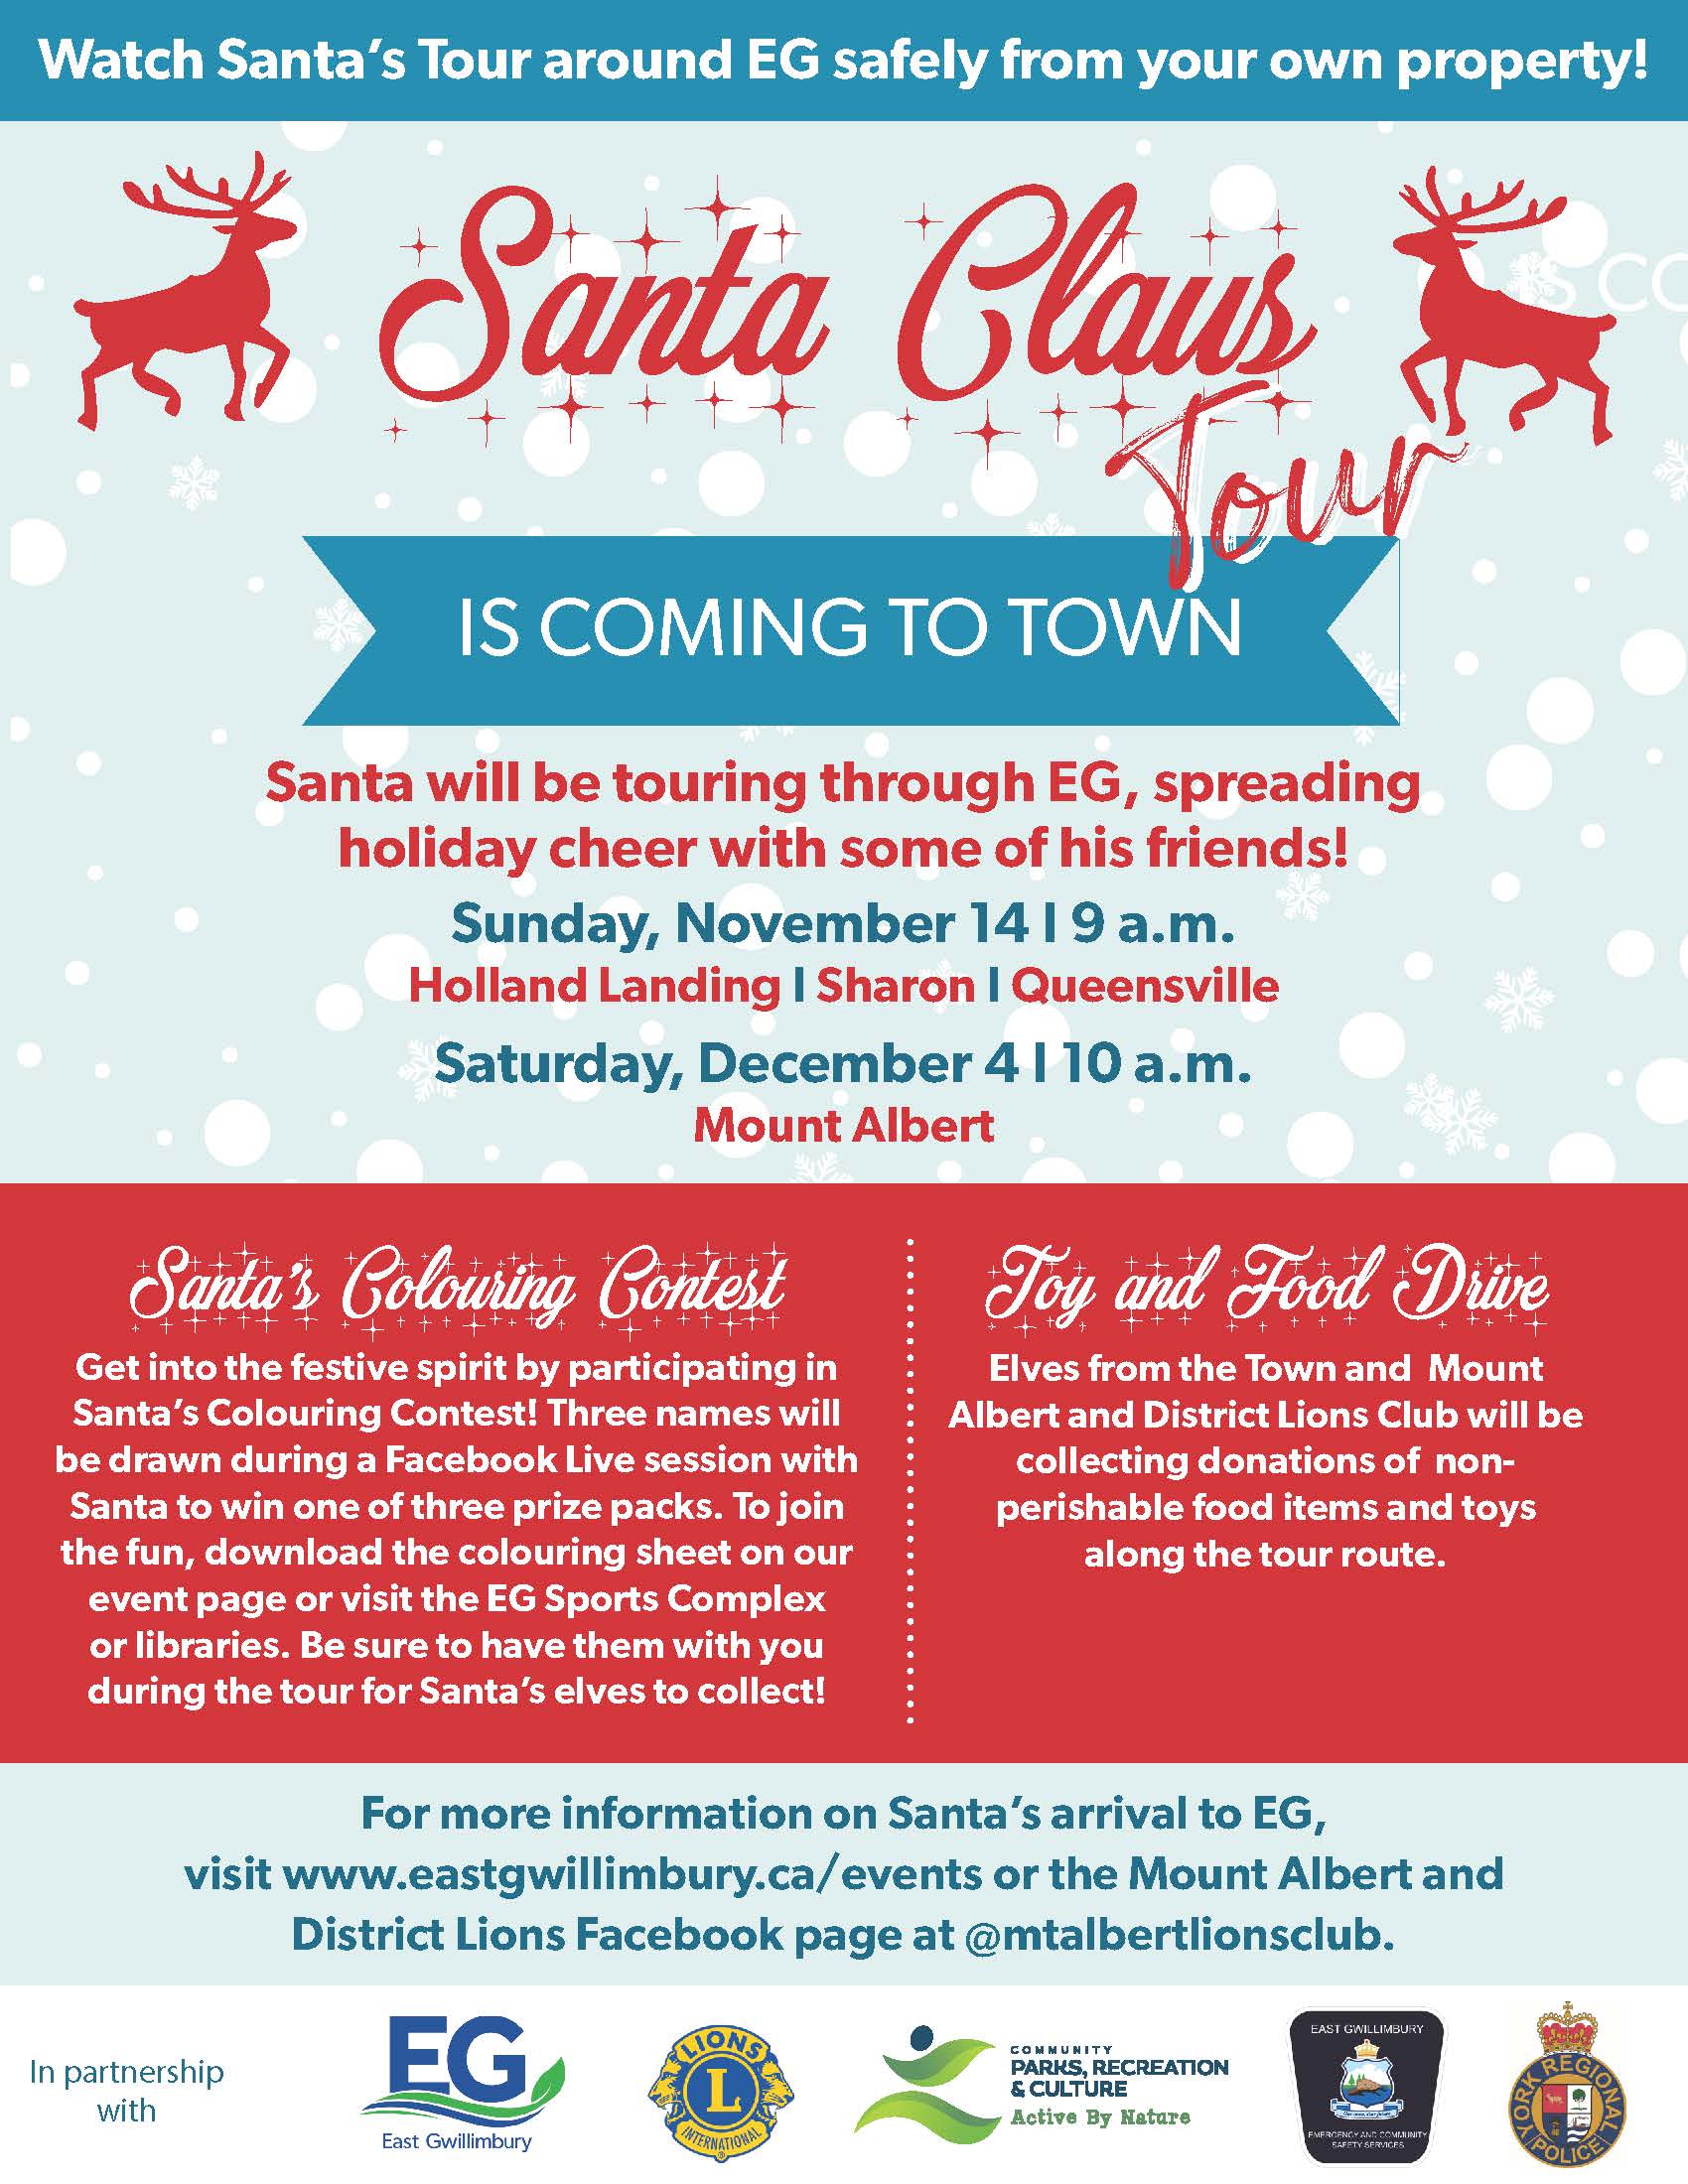 Santa and reindeer - parade tour on November 14 at 9 a.m.